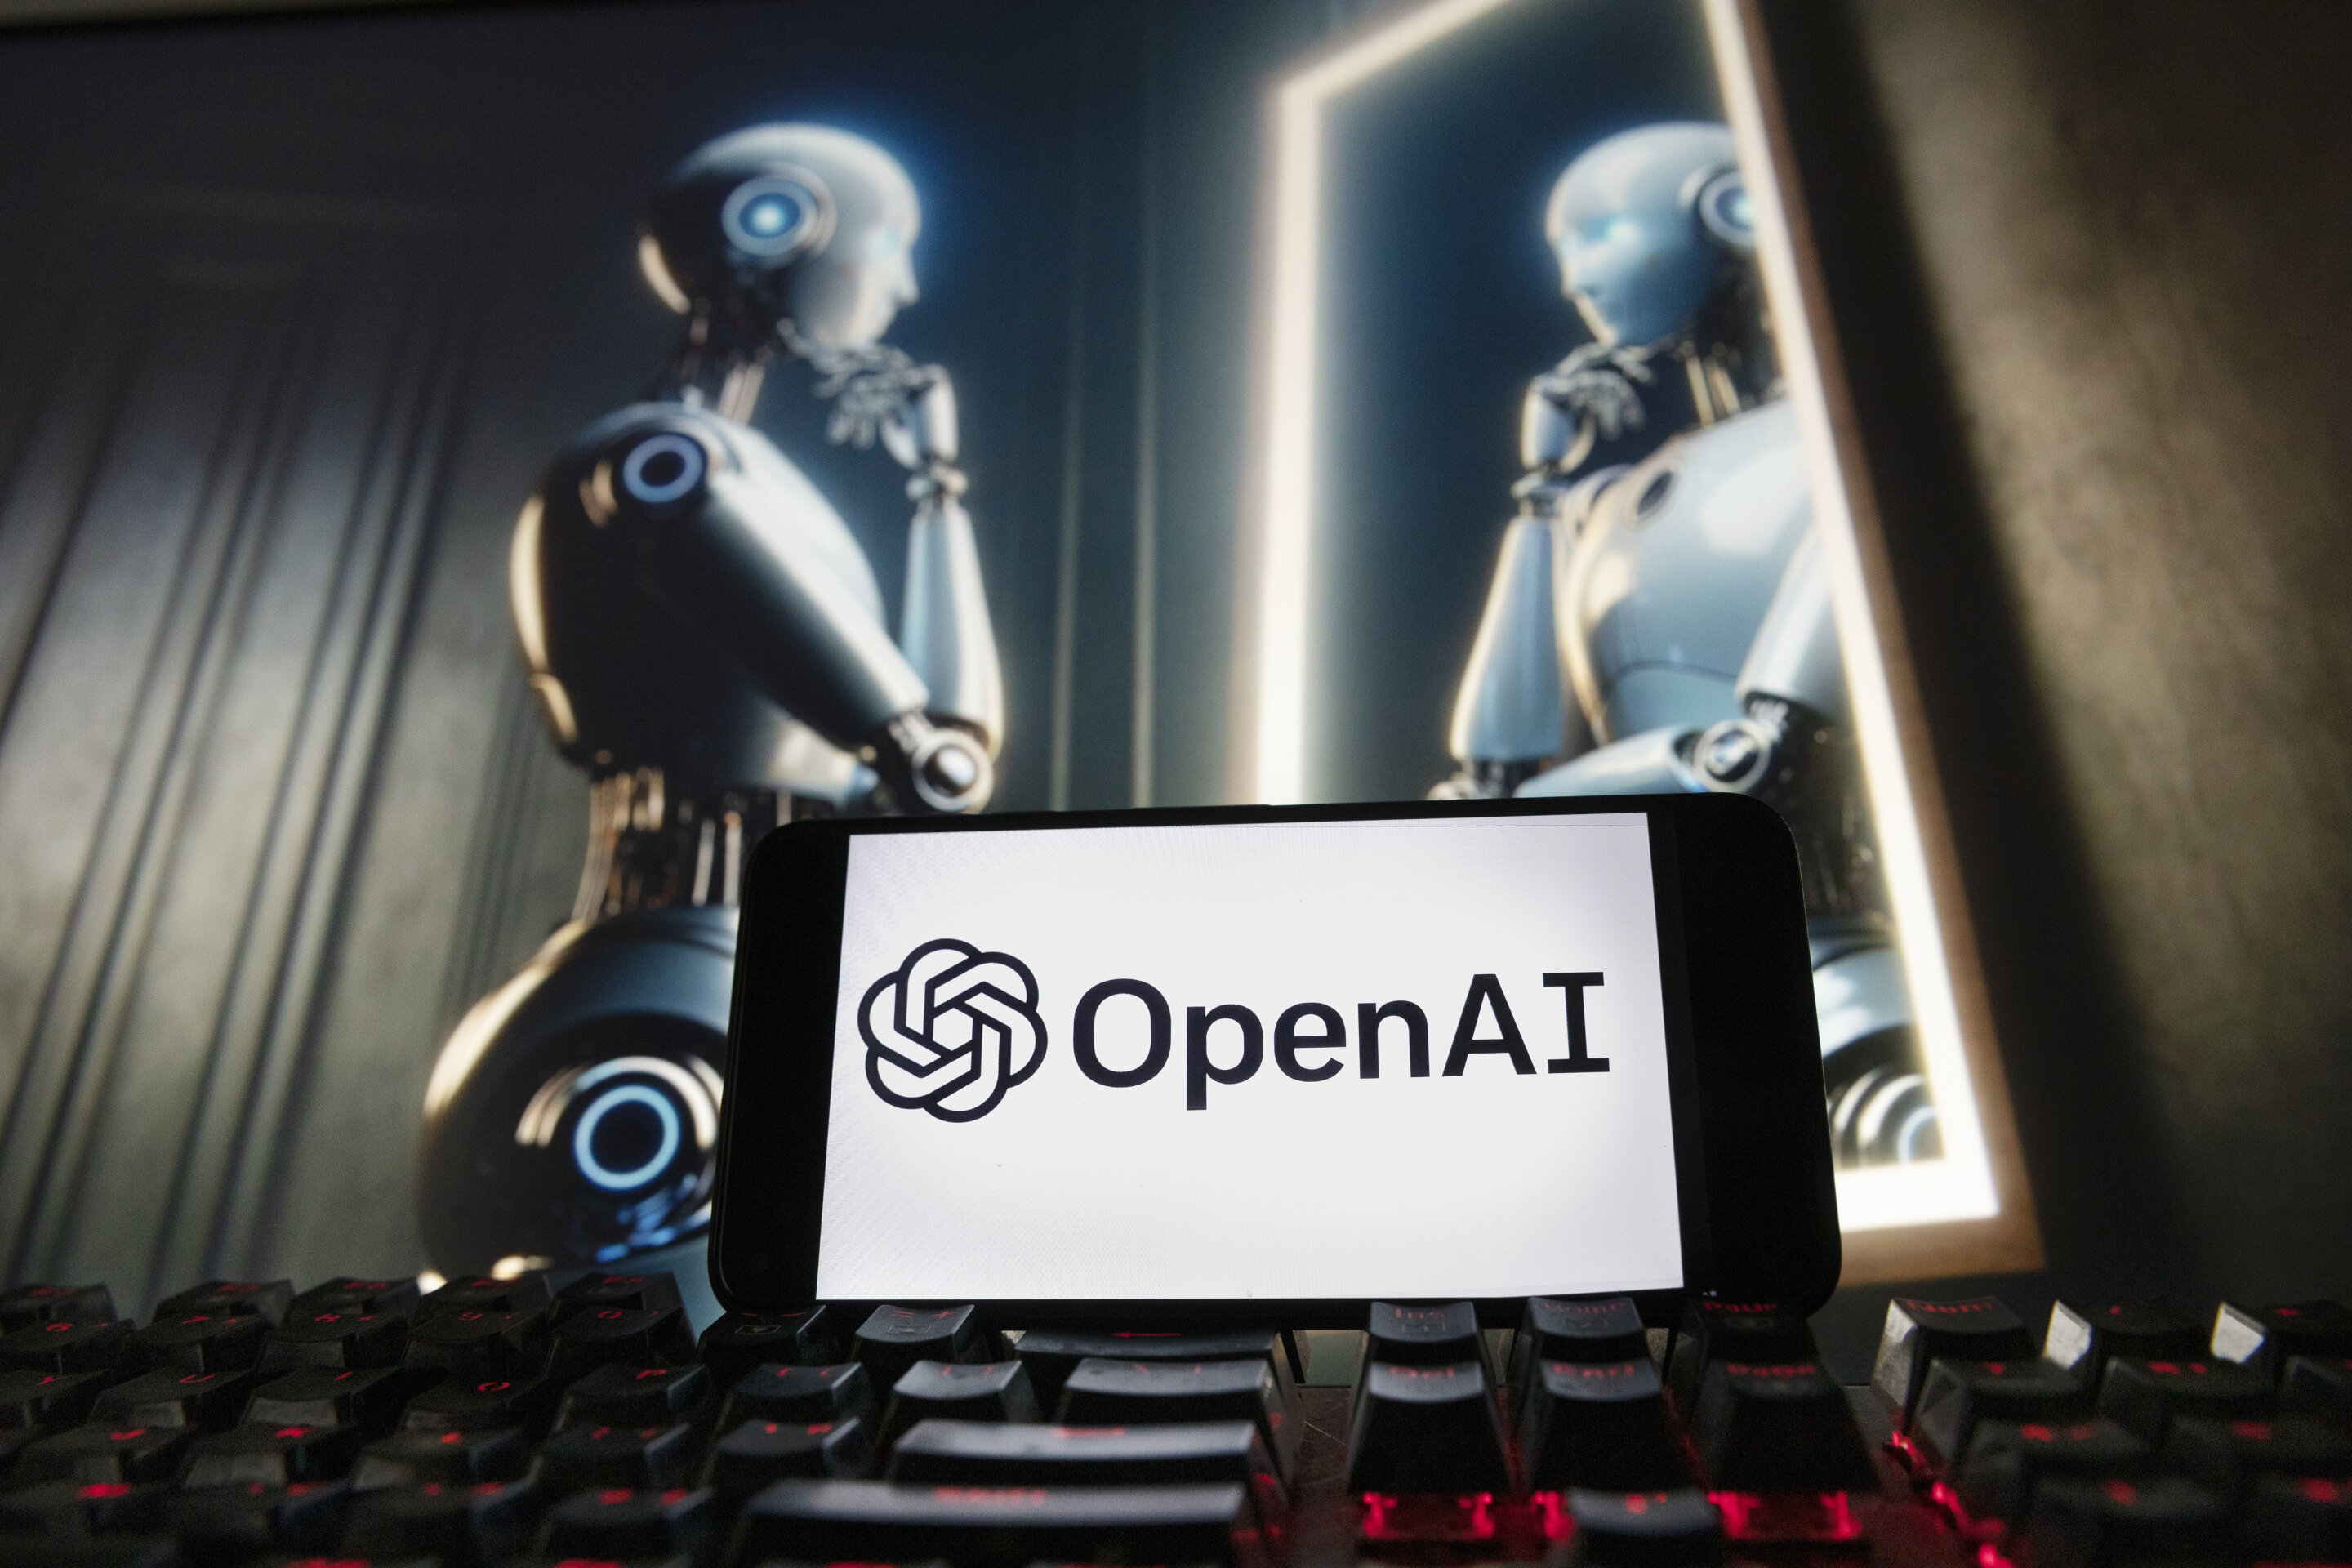 #OpenAI founder Sutskever sets up new AI company devoted to ‘safe superintelligence’